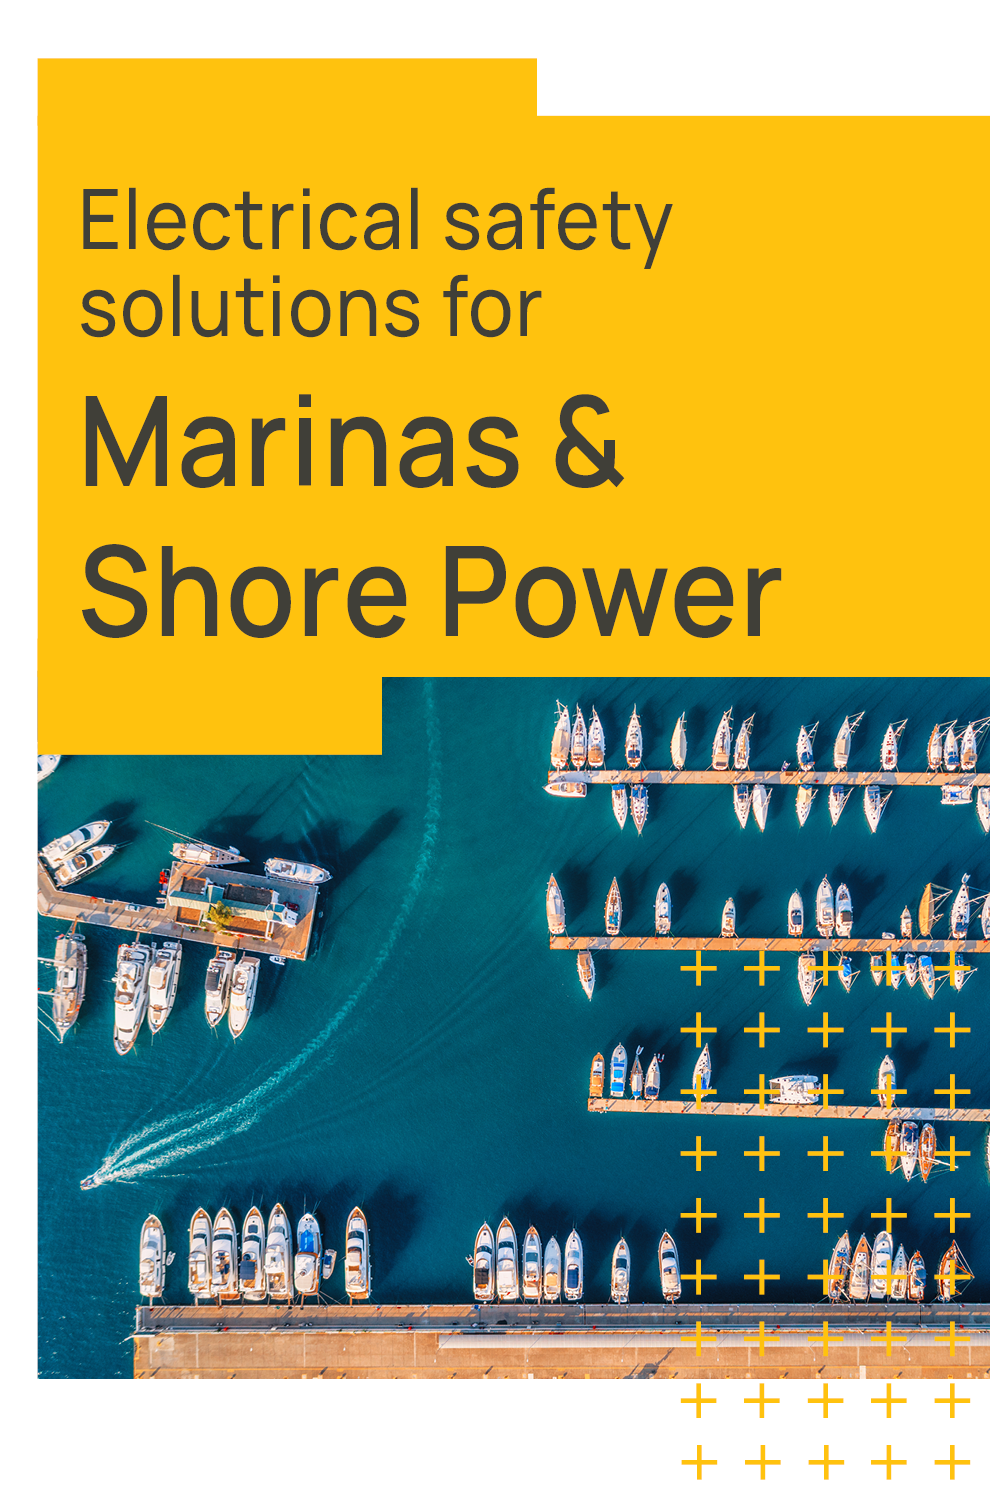 Marinas & Shore Power Brochure